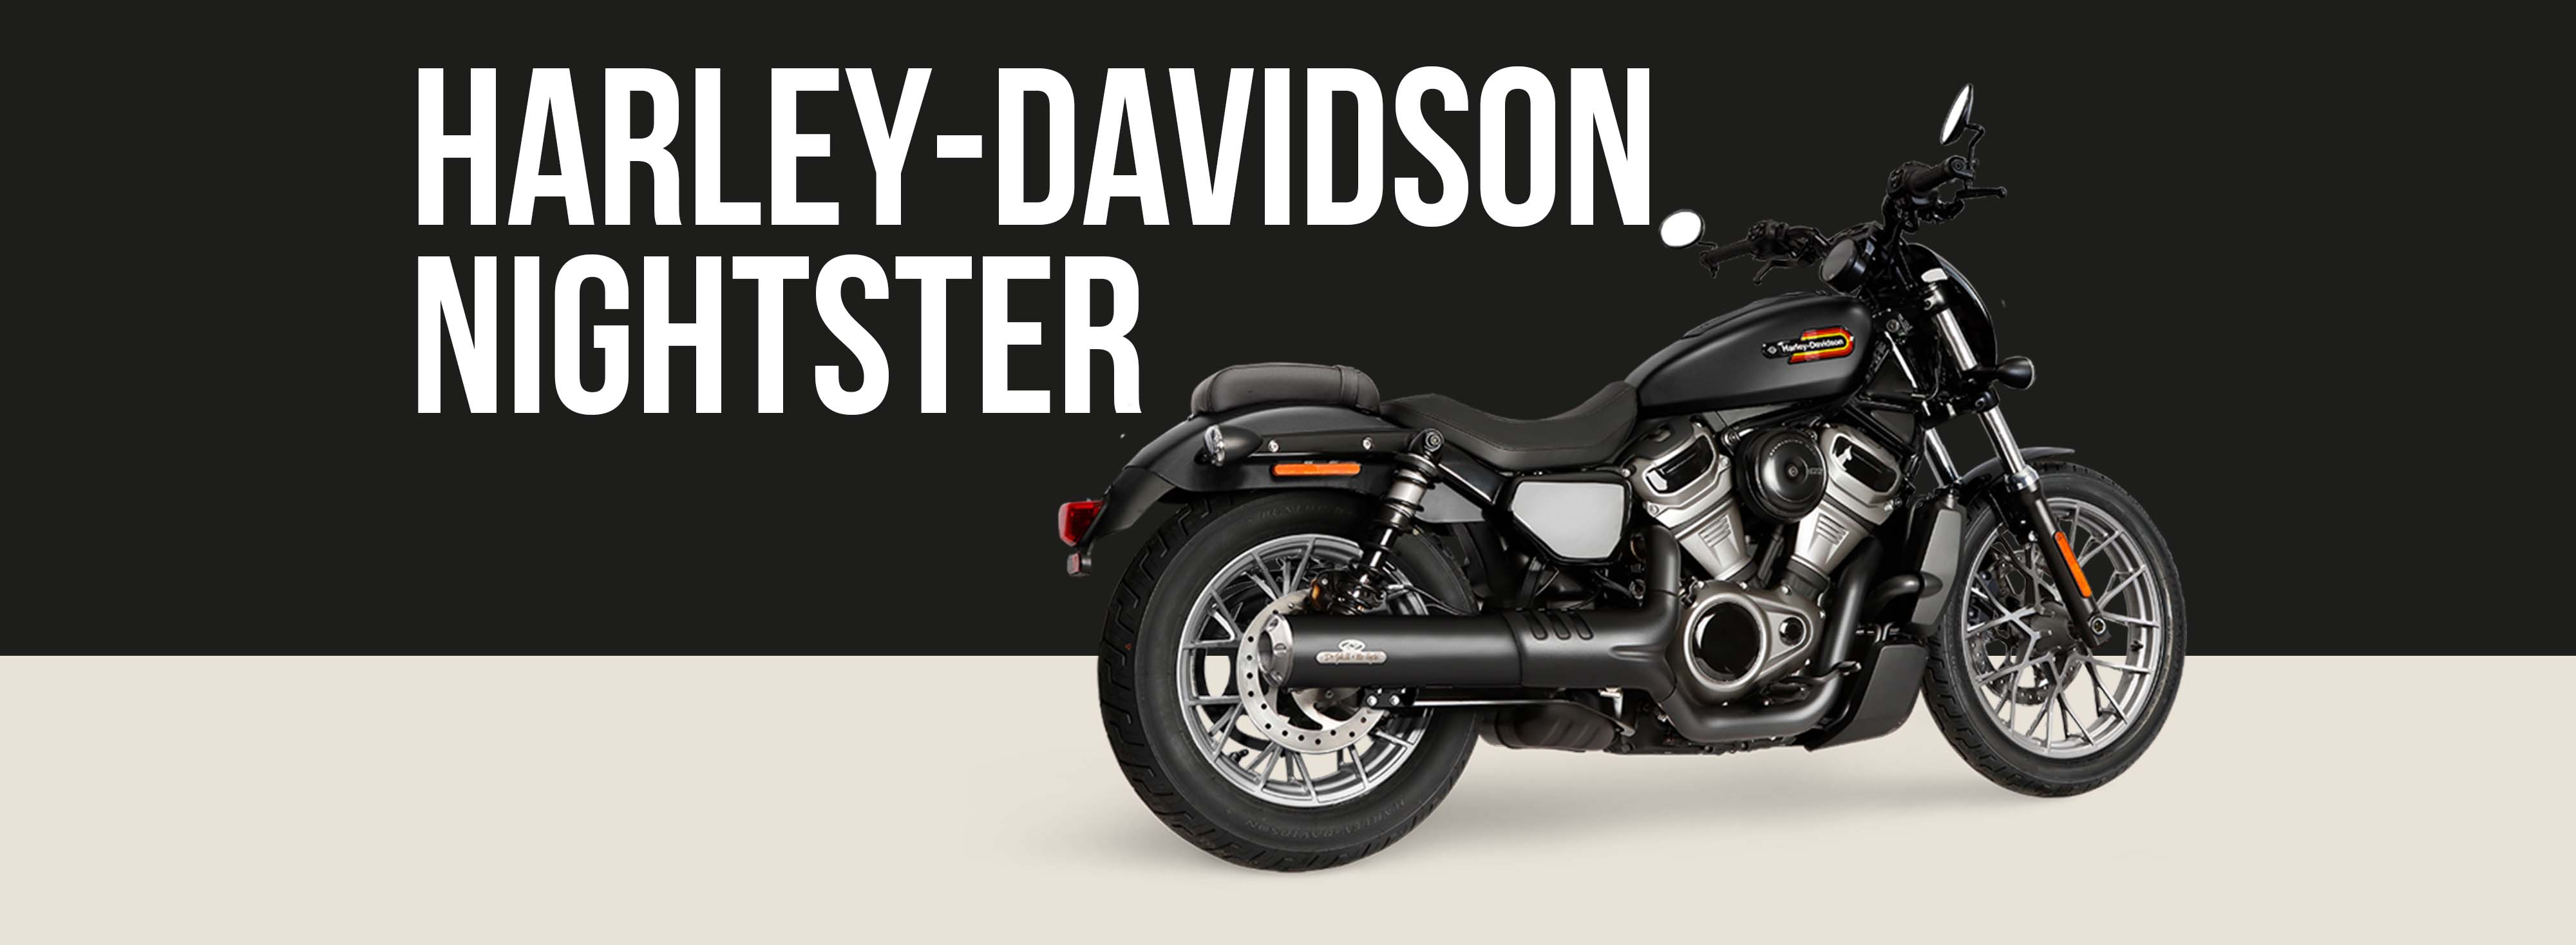 Harley-Davidson Nightster Motorcycle Brand Page Header